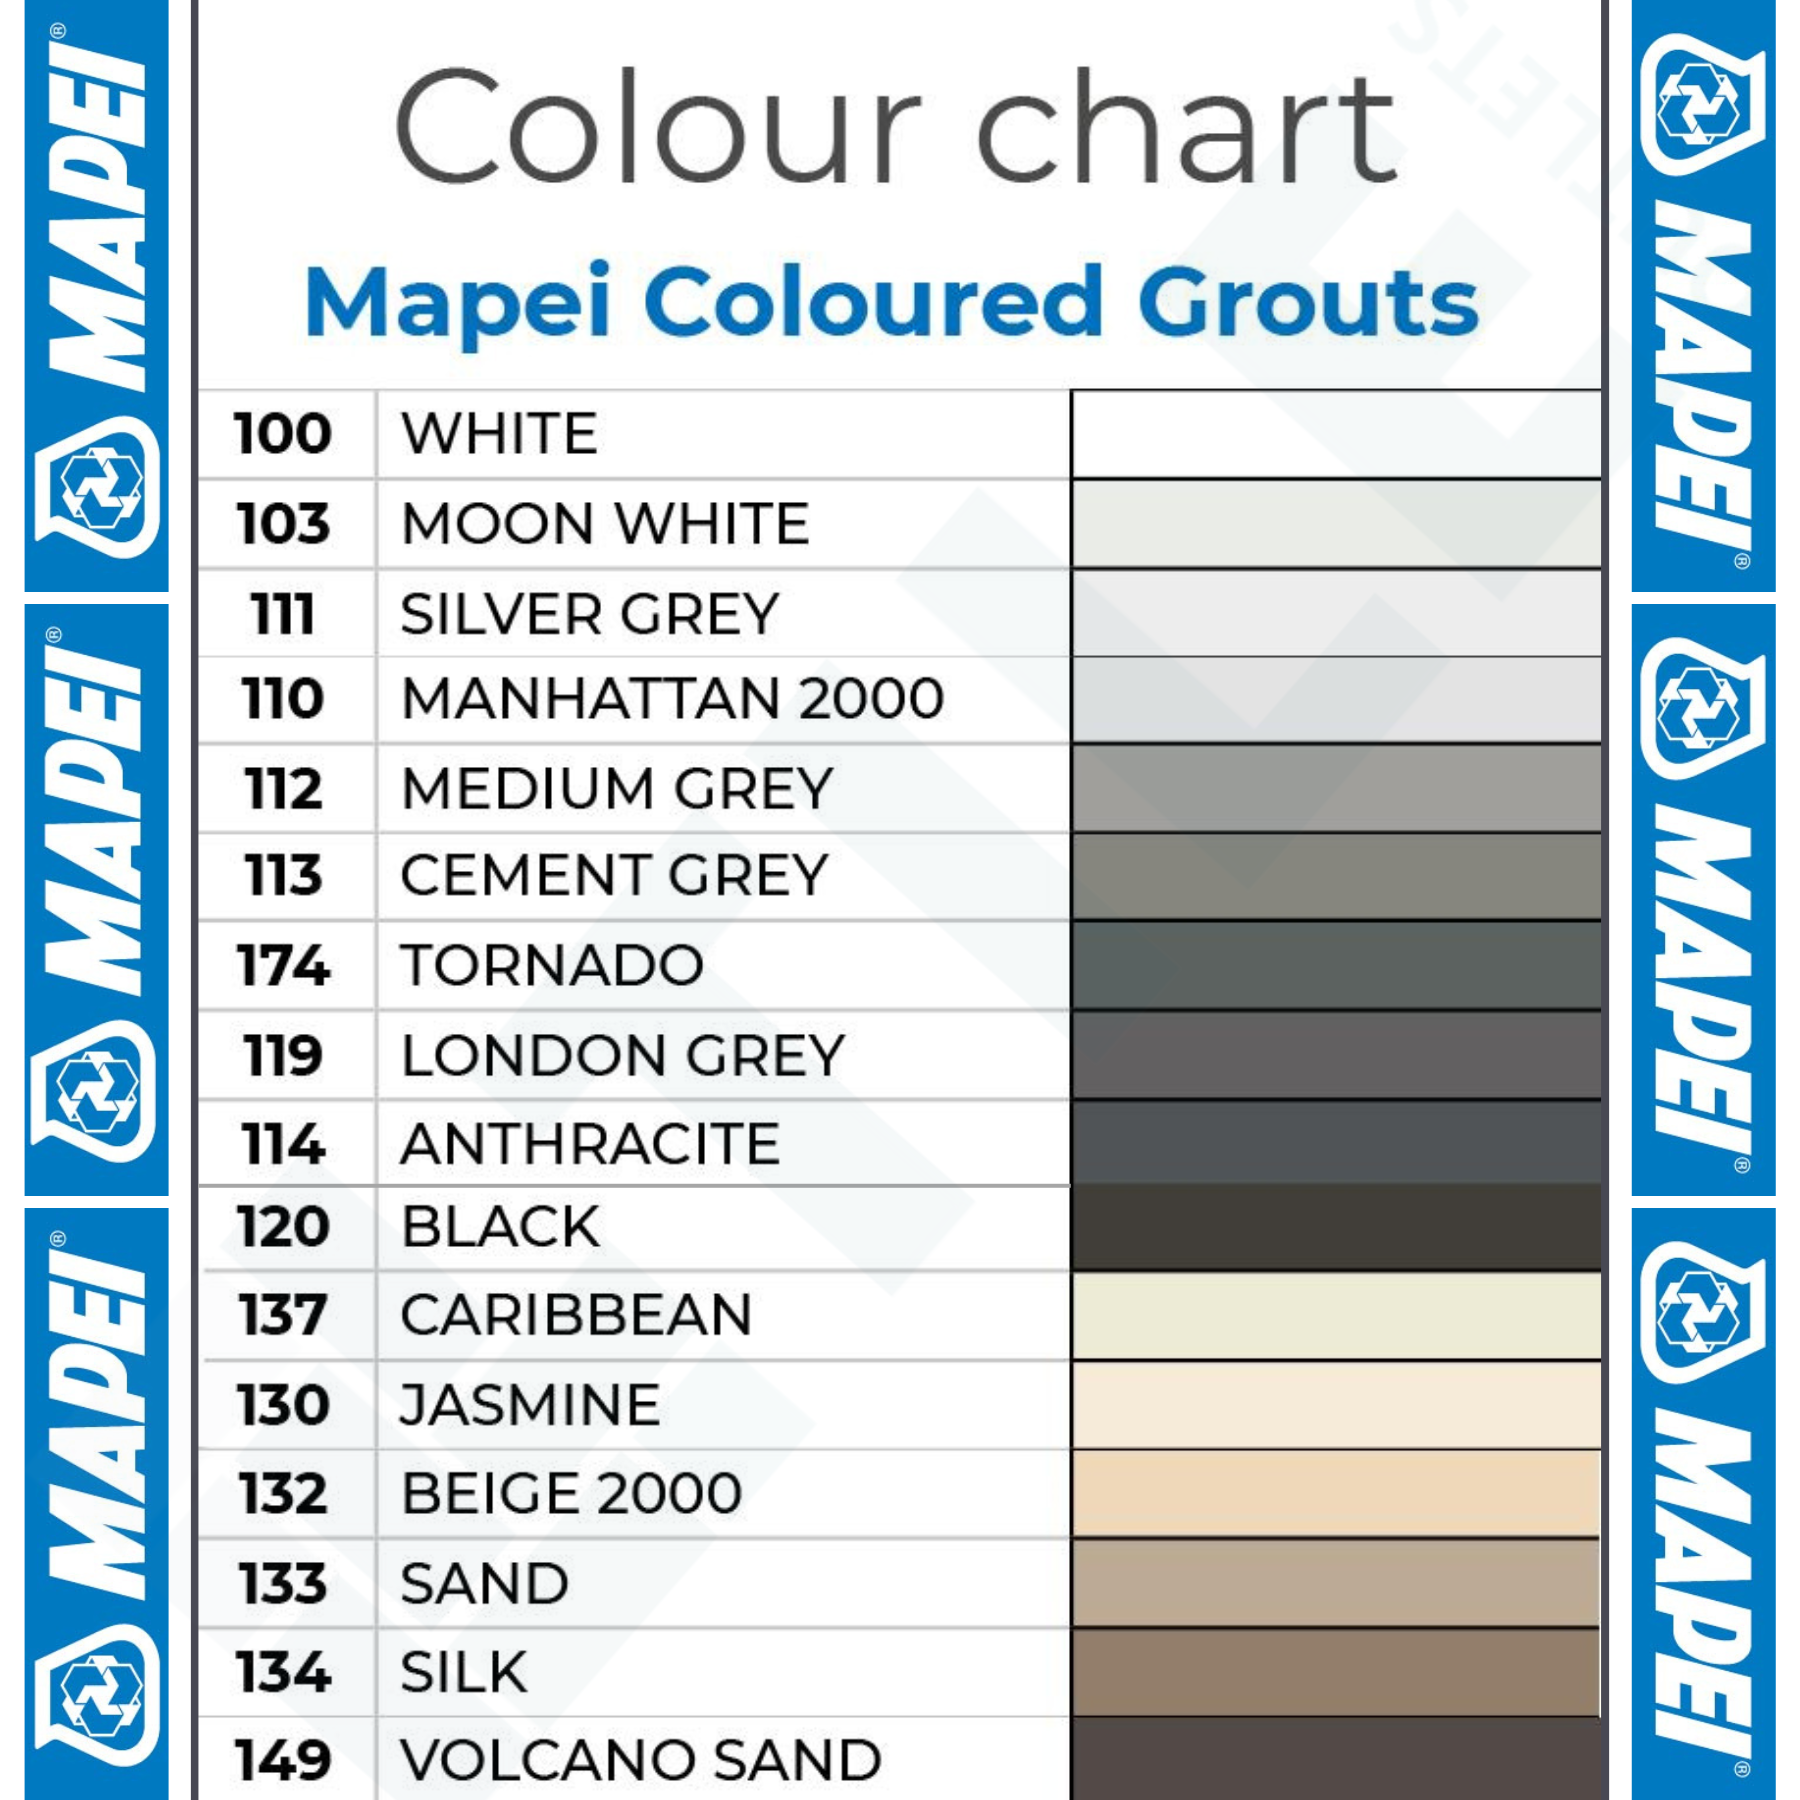 Mapei UltraColour Plus London Grey 119 Grout